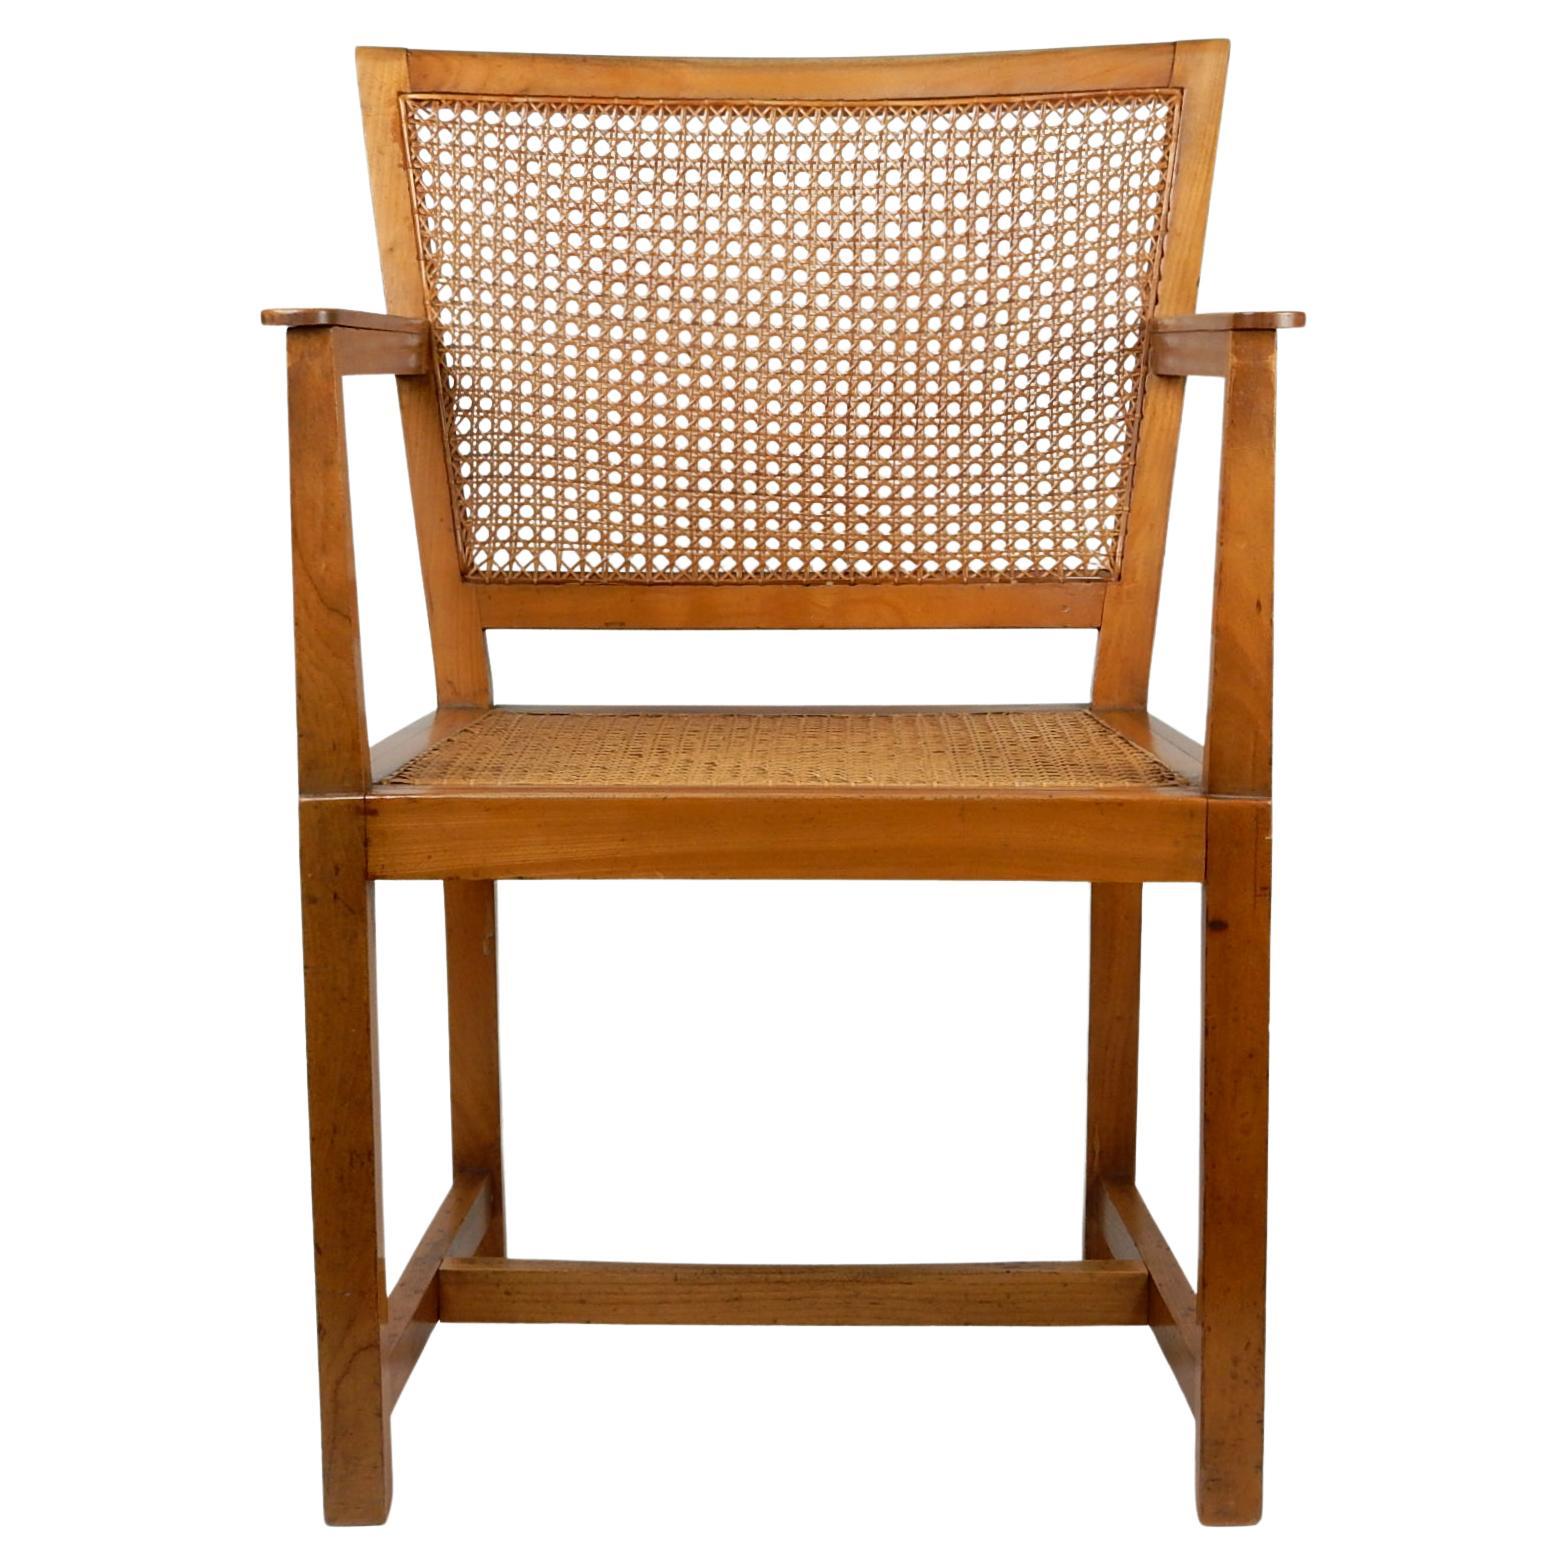 Architect Oskar Strnad 1879-1935 Pine & Cane Arm Chair 1920's Art Deco For Sale